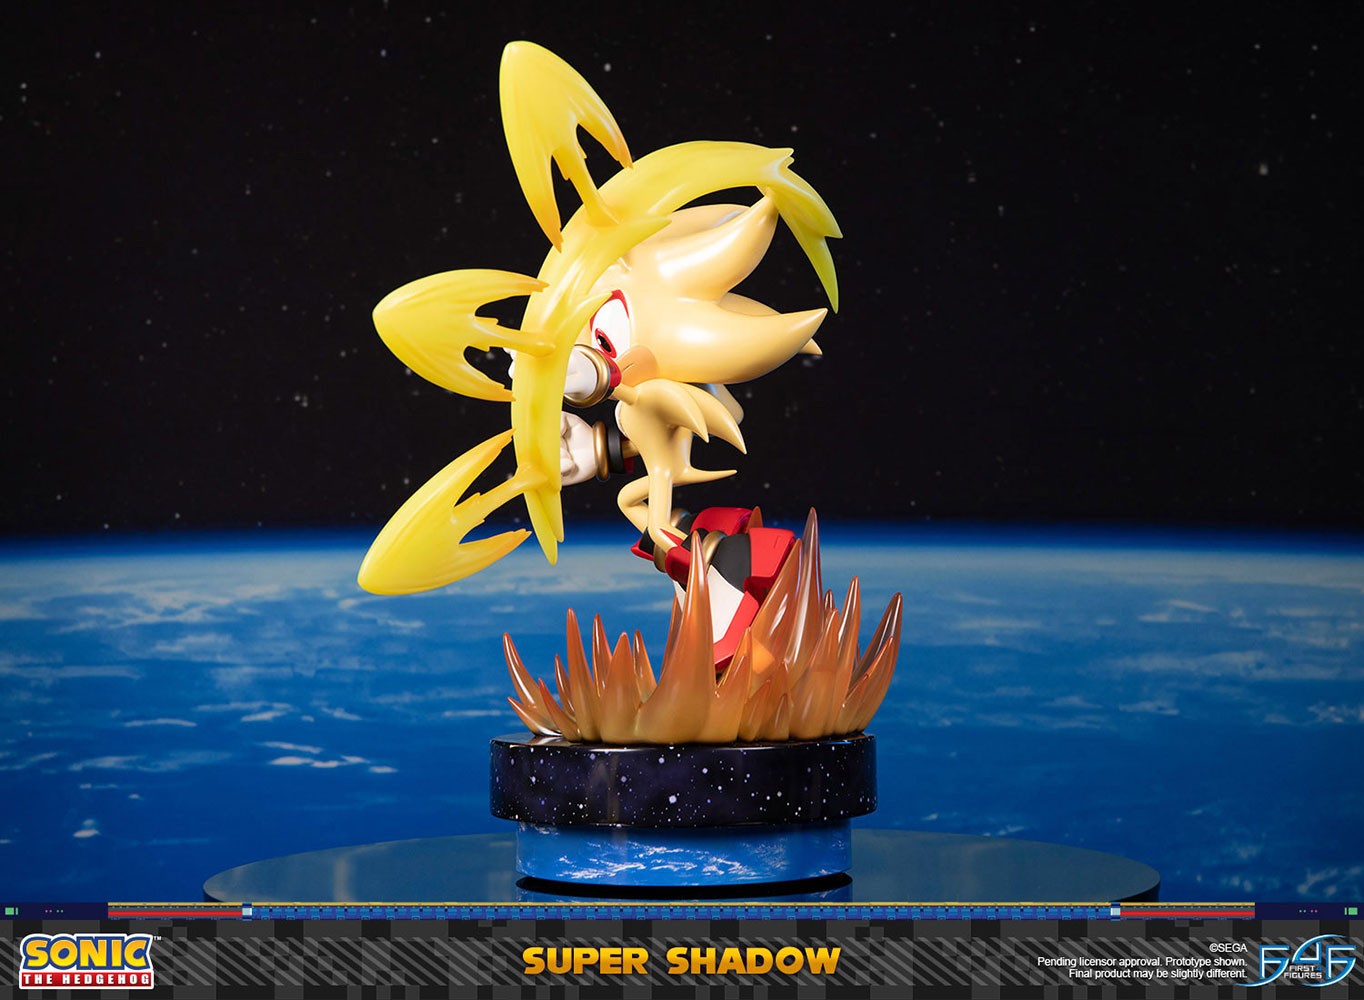 Super Shadow